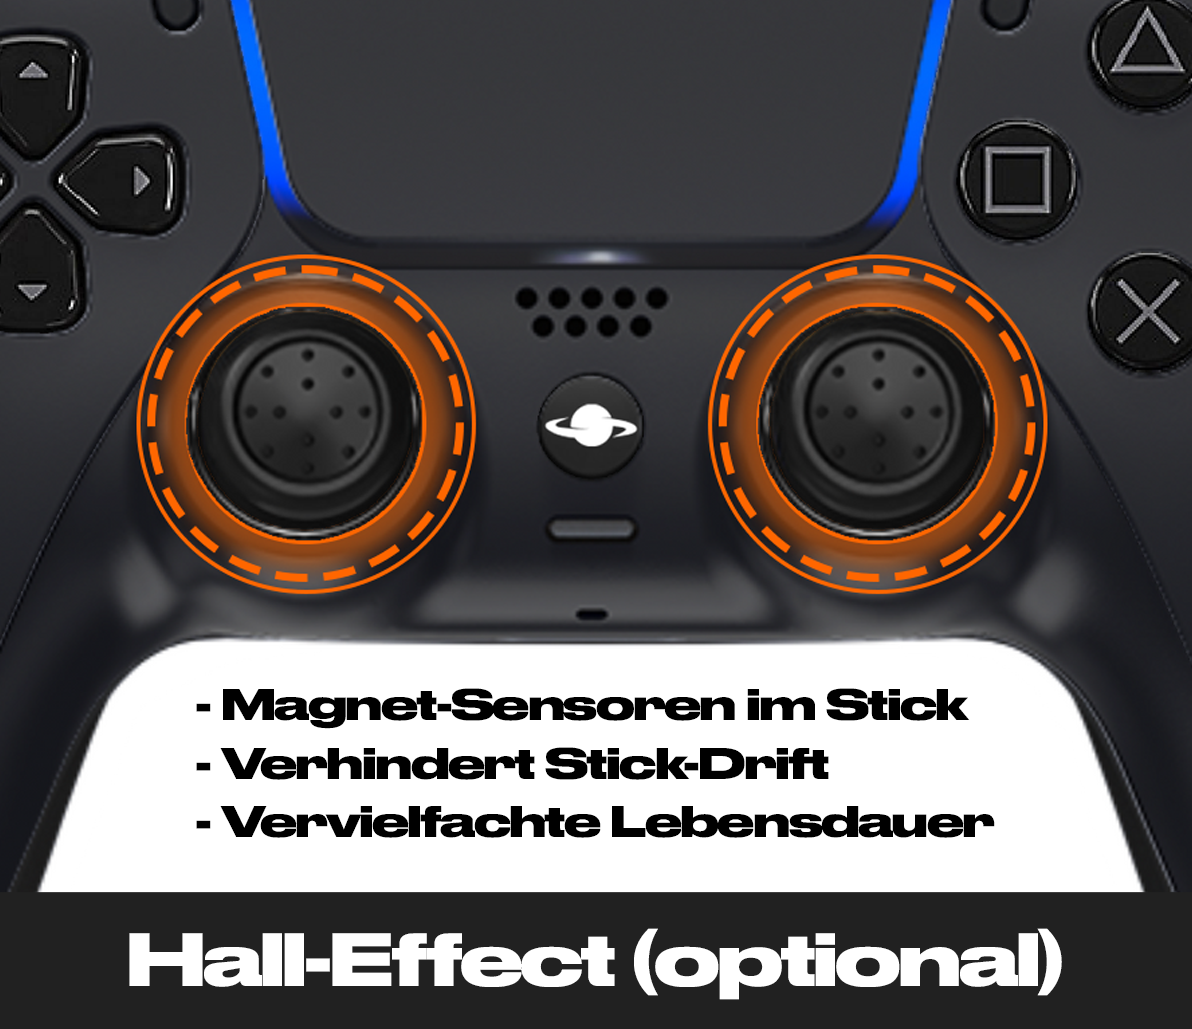 PS5 Custom Controller 'Orange Mecha'